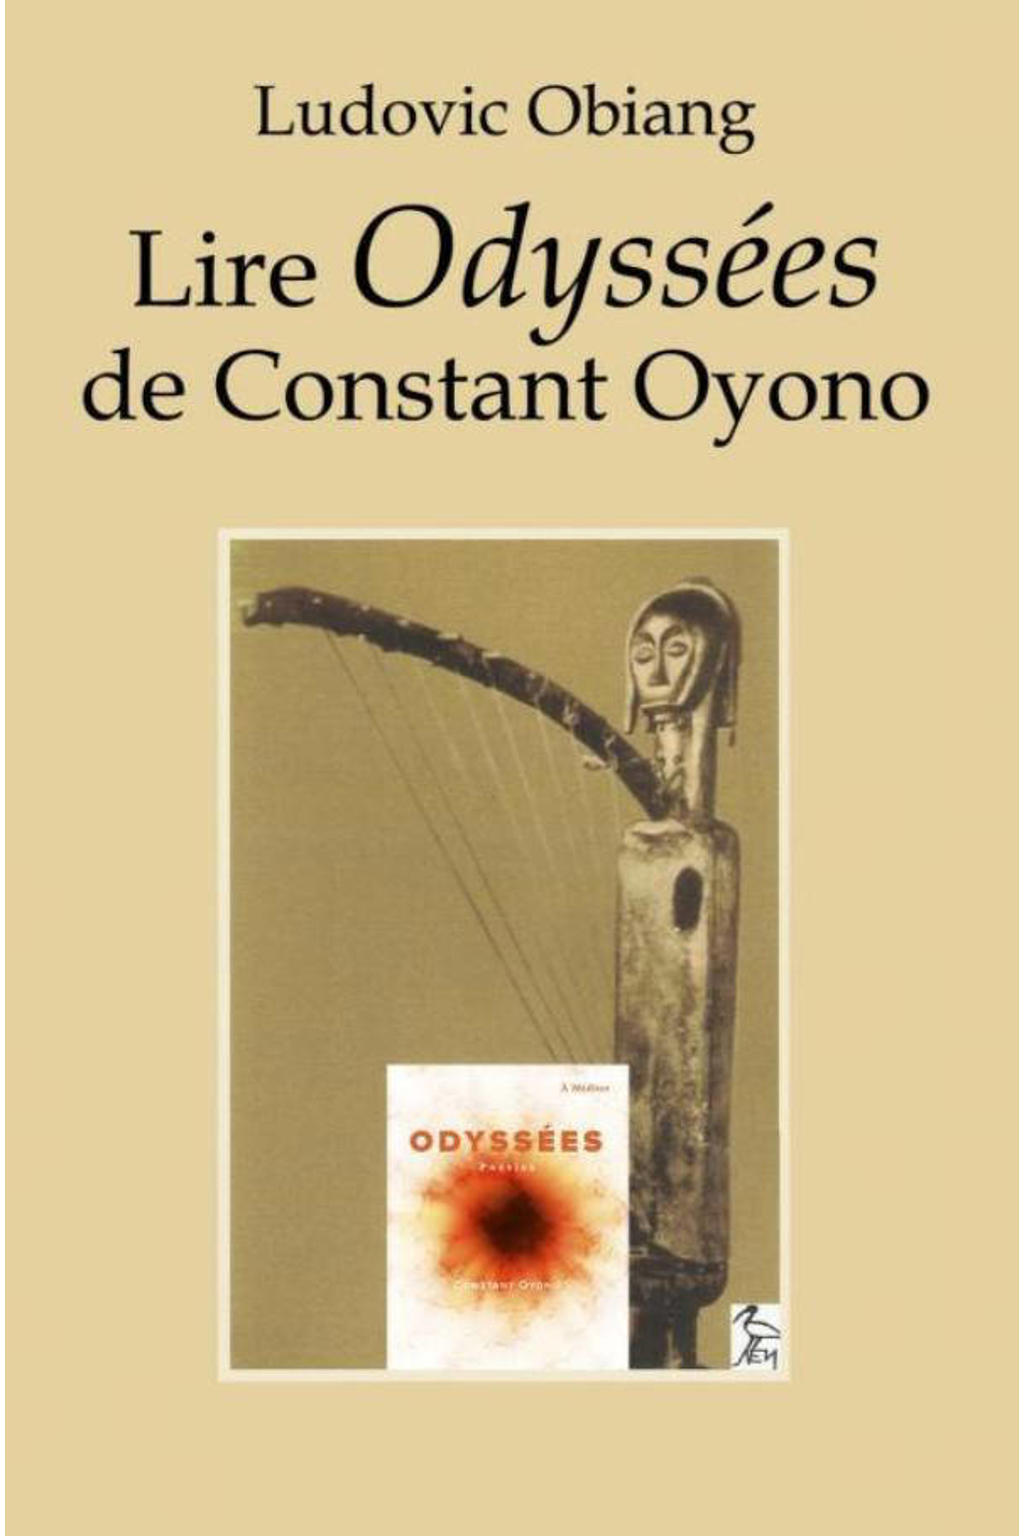 Lire Odyssées de Constant Oyono - Ludovic Obiang